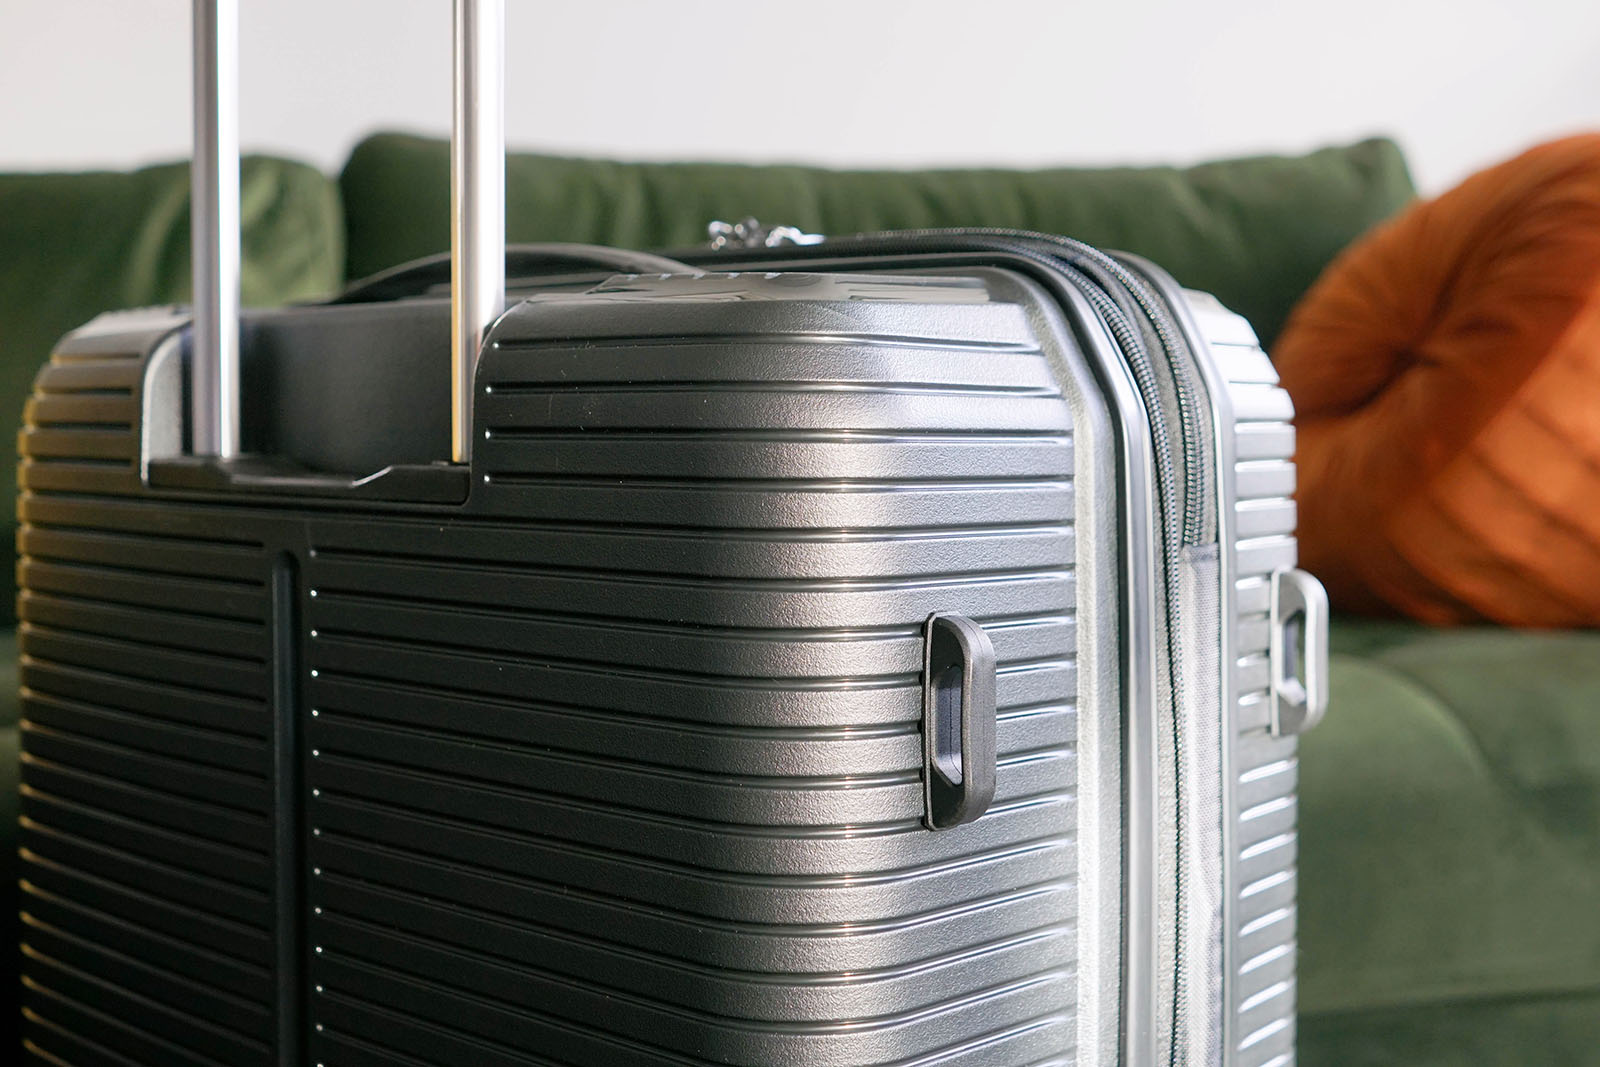 Chroma Plus Hard luggage With TSA Lock, Dual Wheel and Detailed Interi